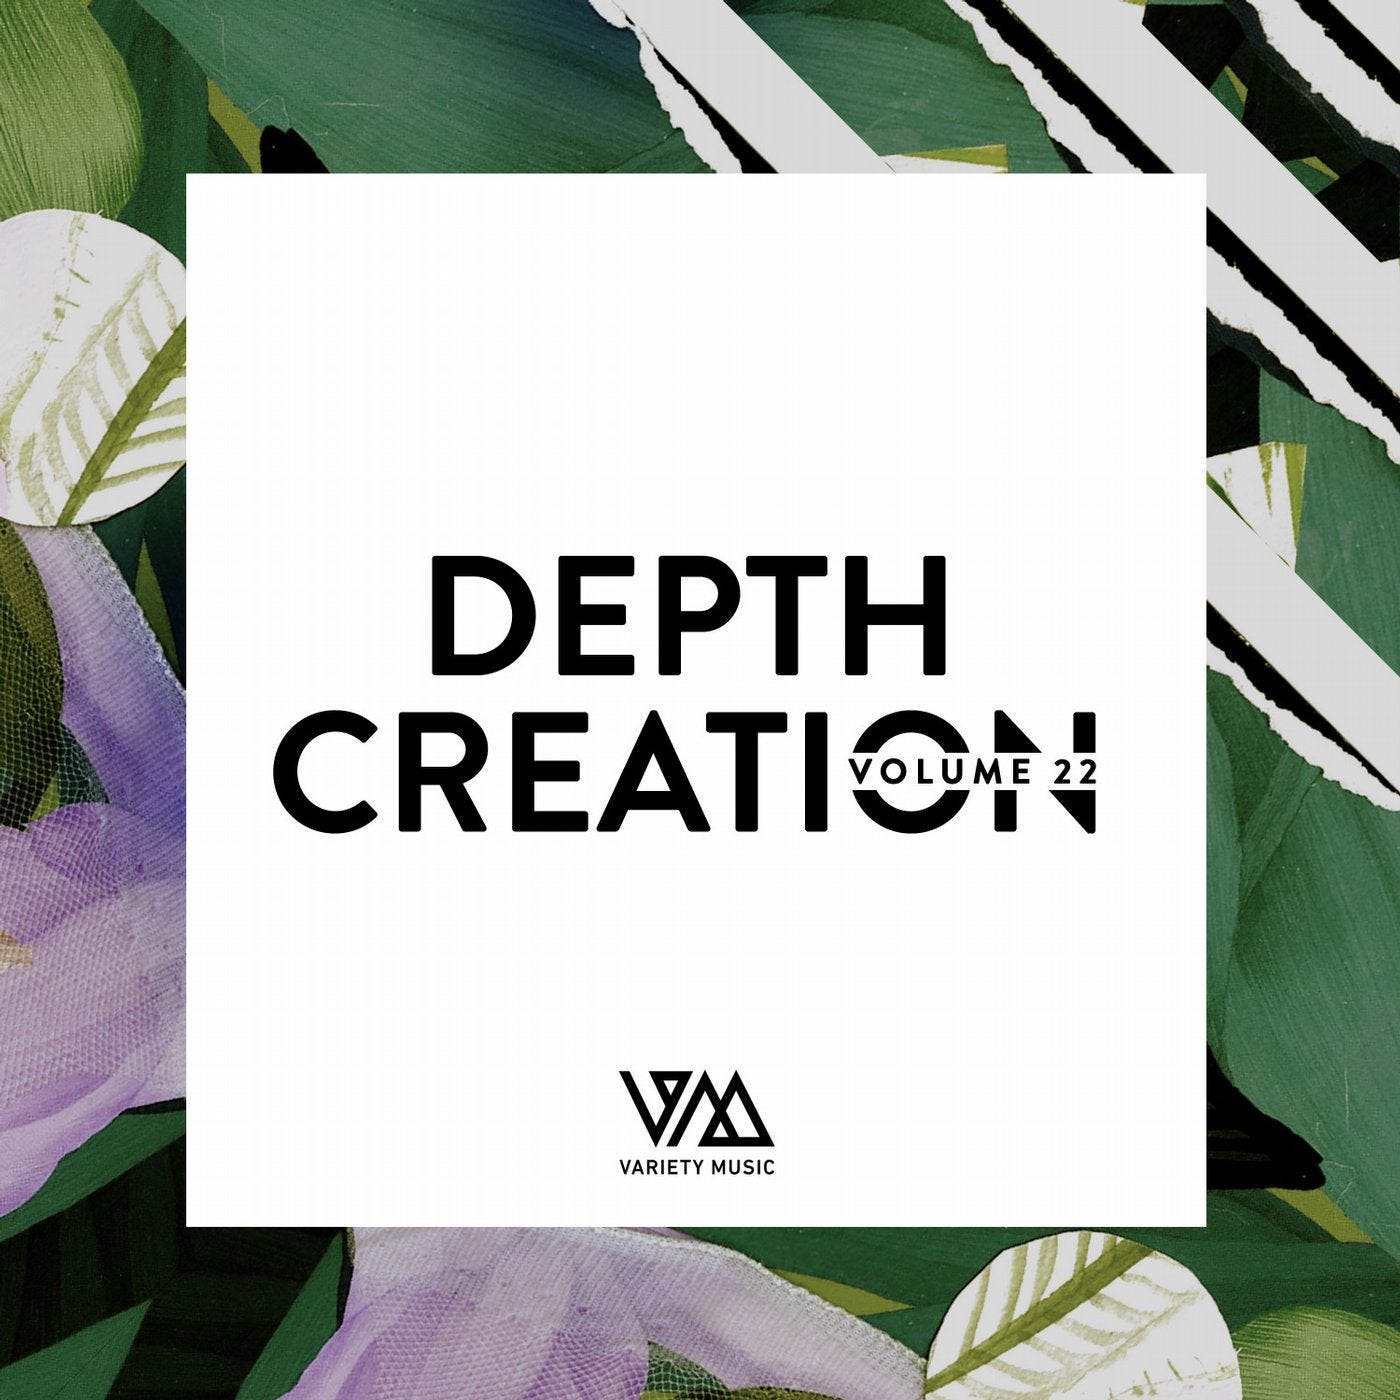 Depth Creation Vol. 22